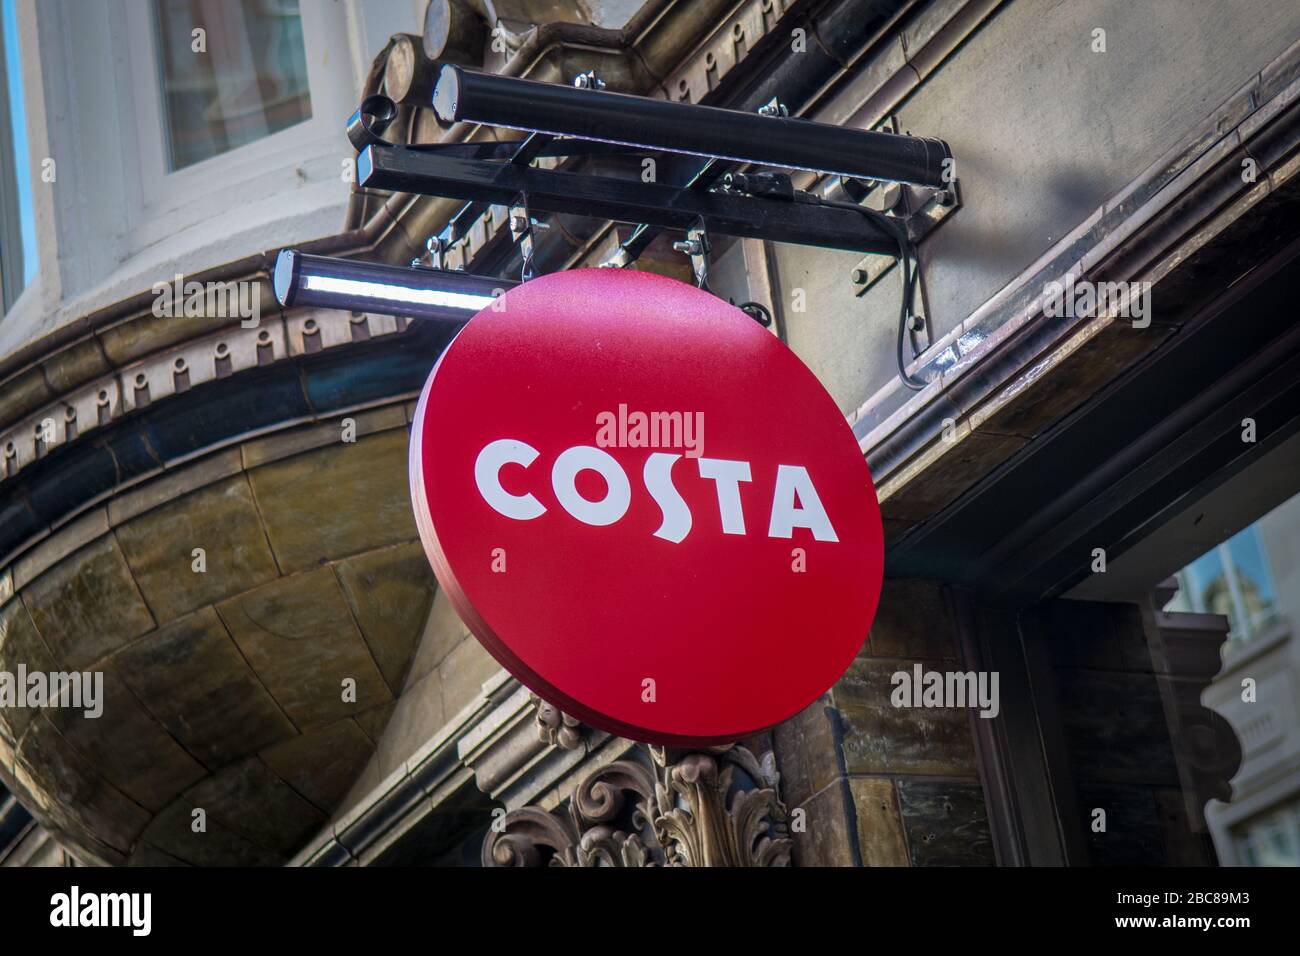 Costa Coffee- catena britannica di caffè High Street- logo esterno / segnaletica- Londra Foto Stock